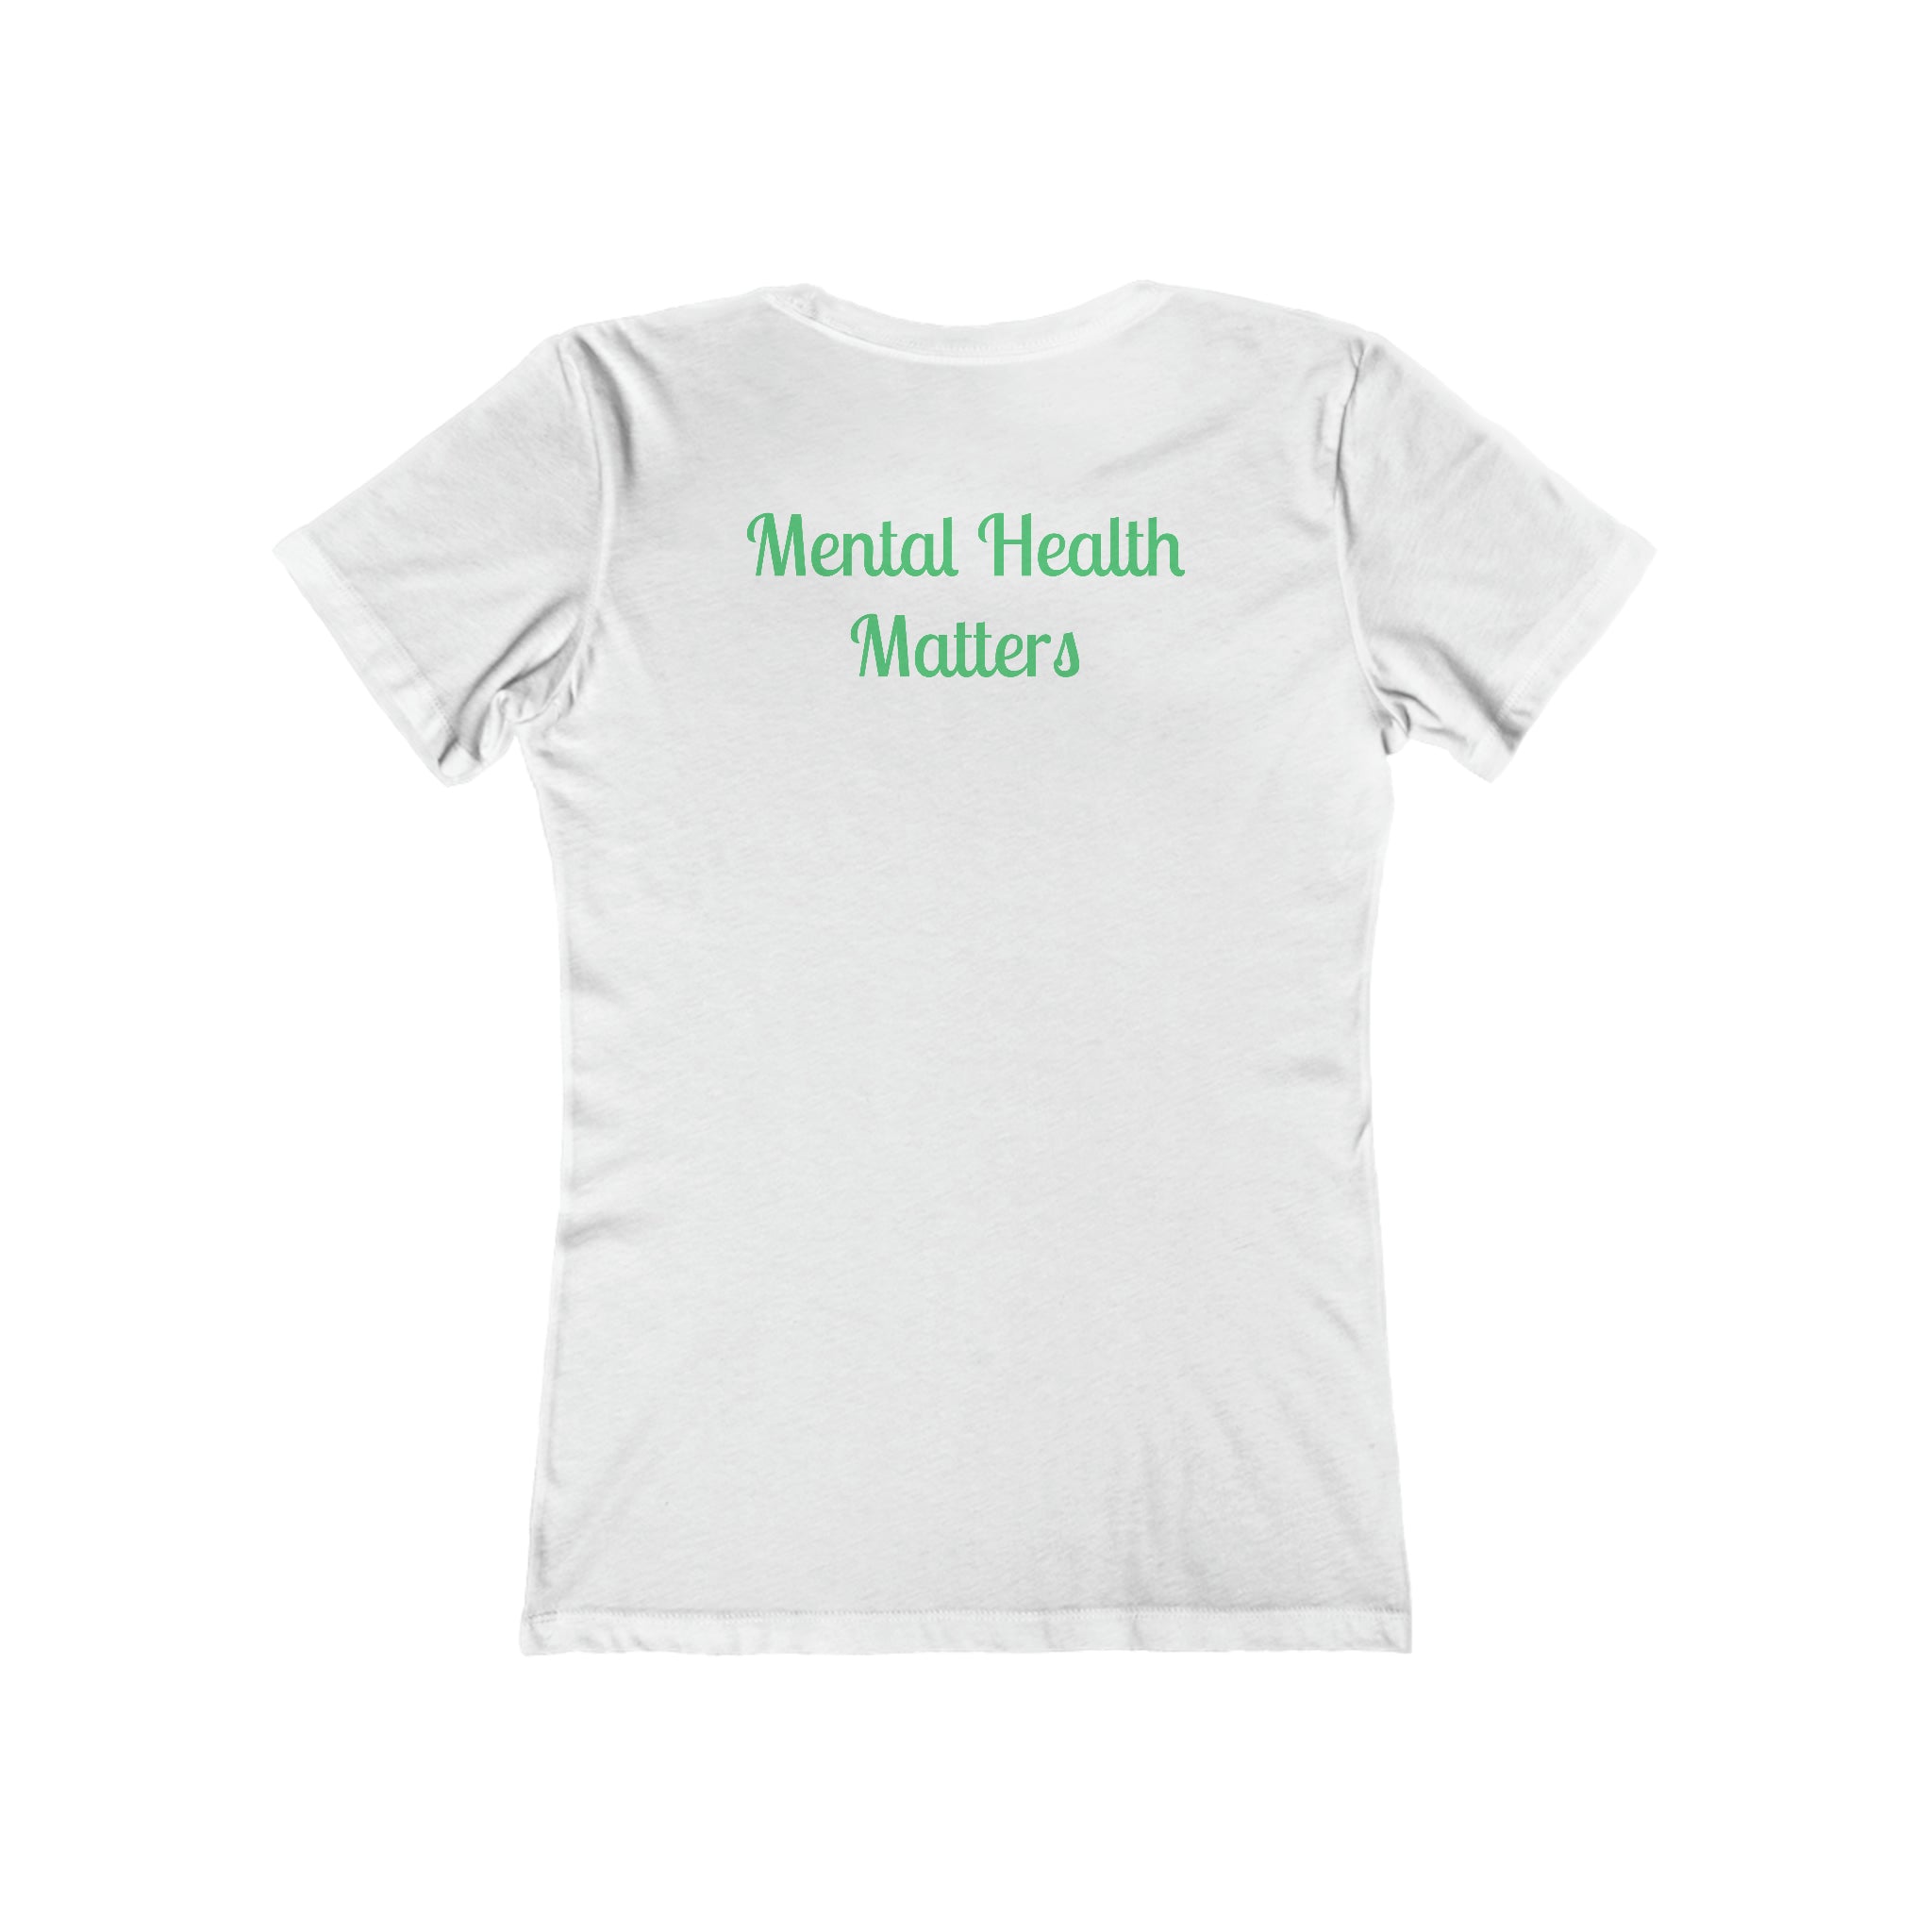 Mental Health Matters Boyfriend Tee: Advocate Change Solid White Awareness Break the Stigma Mental Health Support Pledge Donation slim fit shirt Tee women shirt T-Shirt 11426335554959169511_2048 Printify